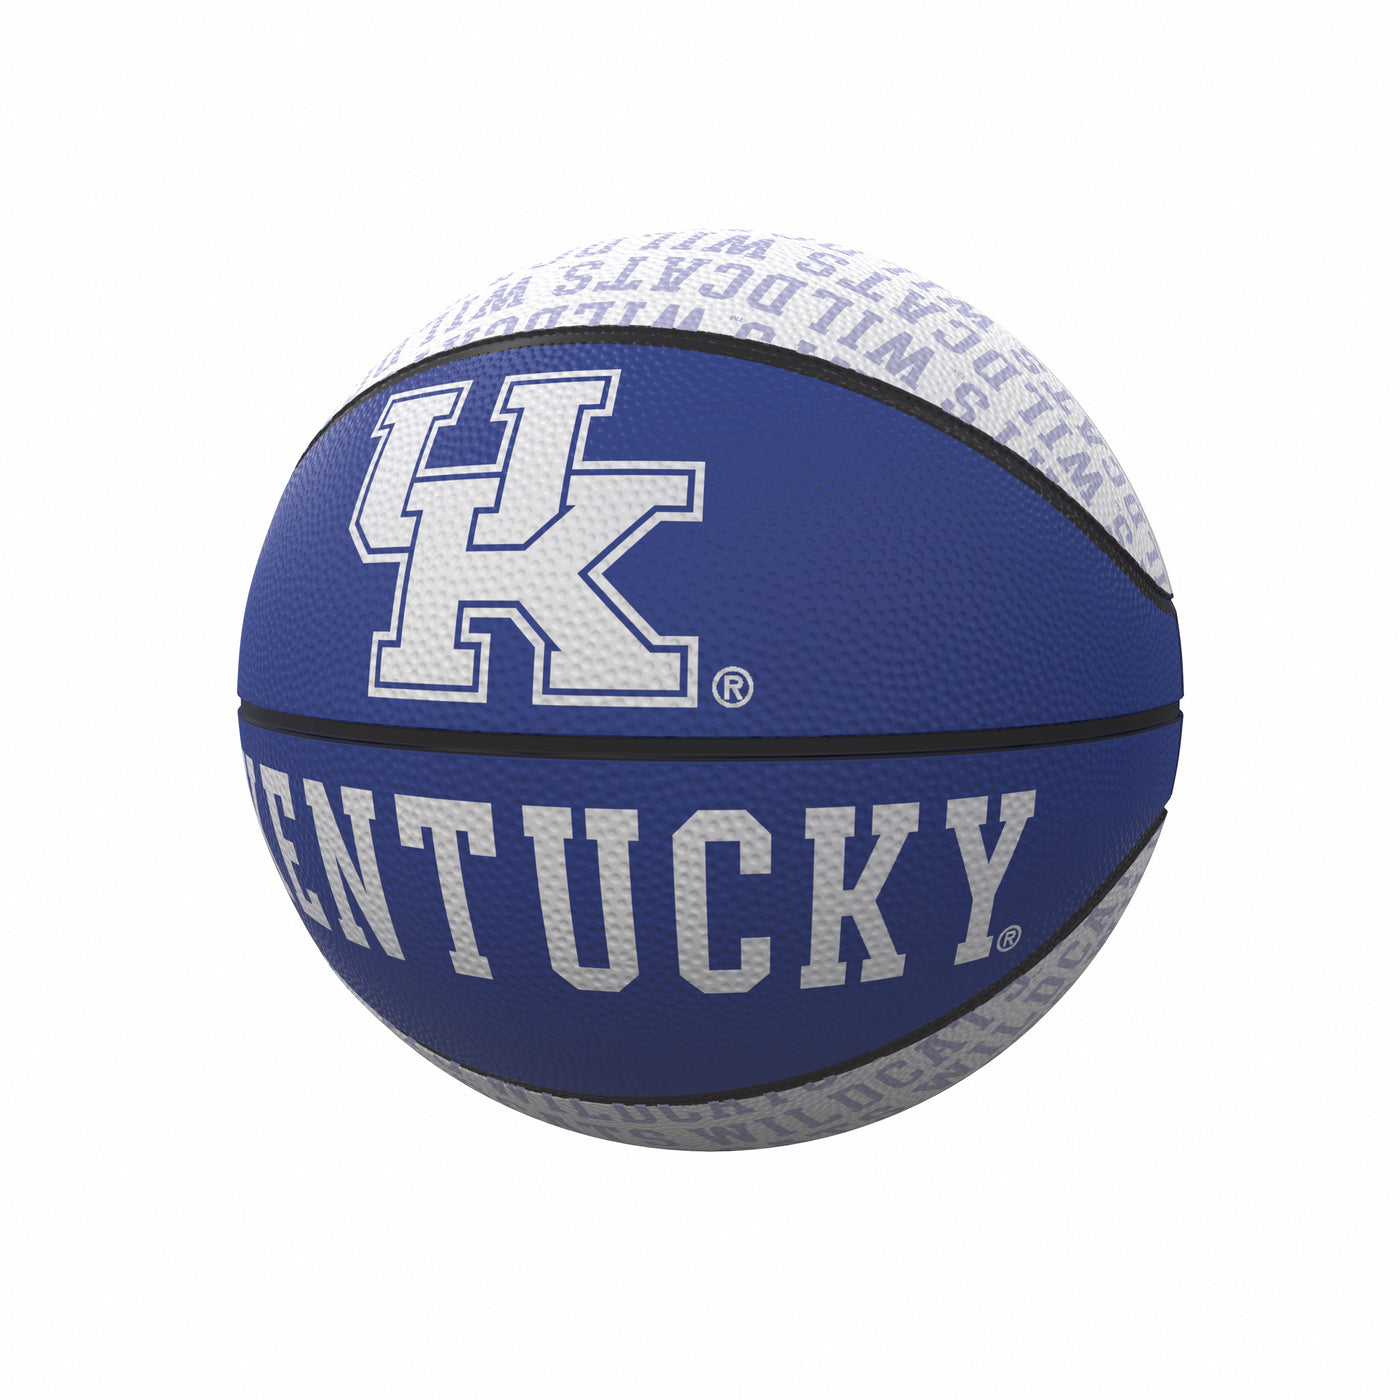 Kentucky Repeating Logo Mini-Size Rubber Basketball